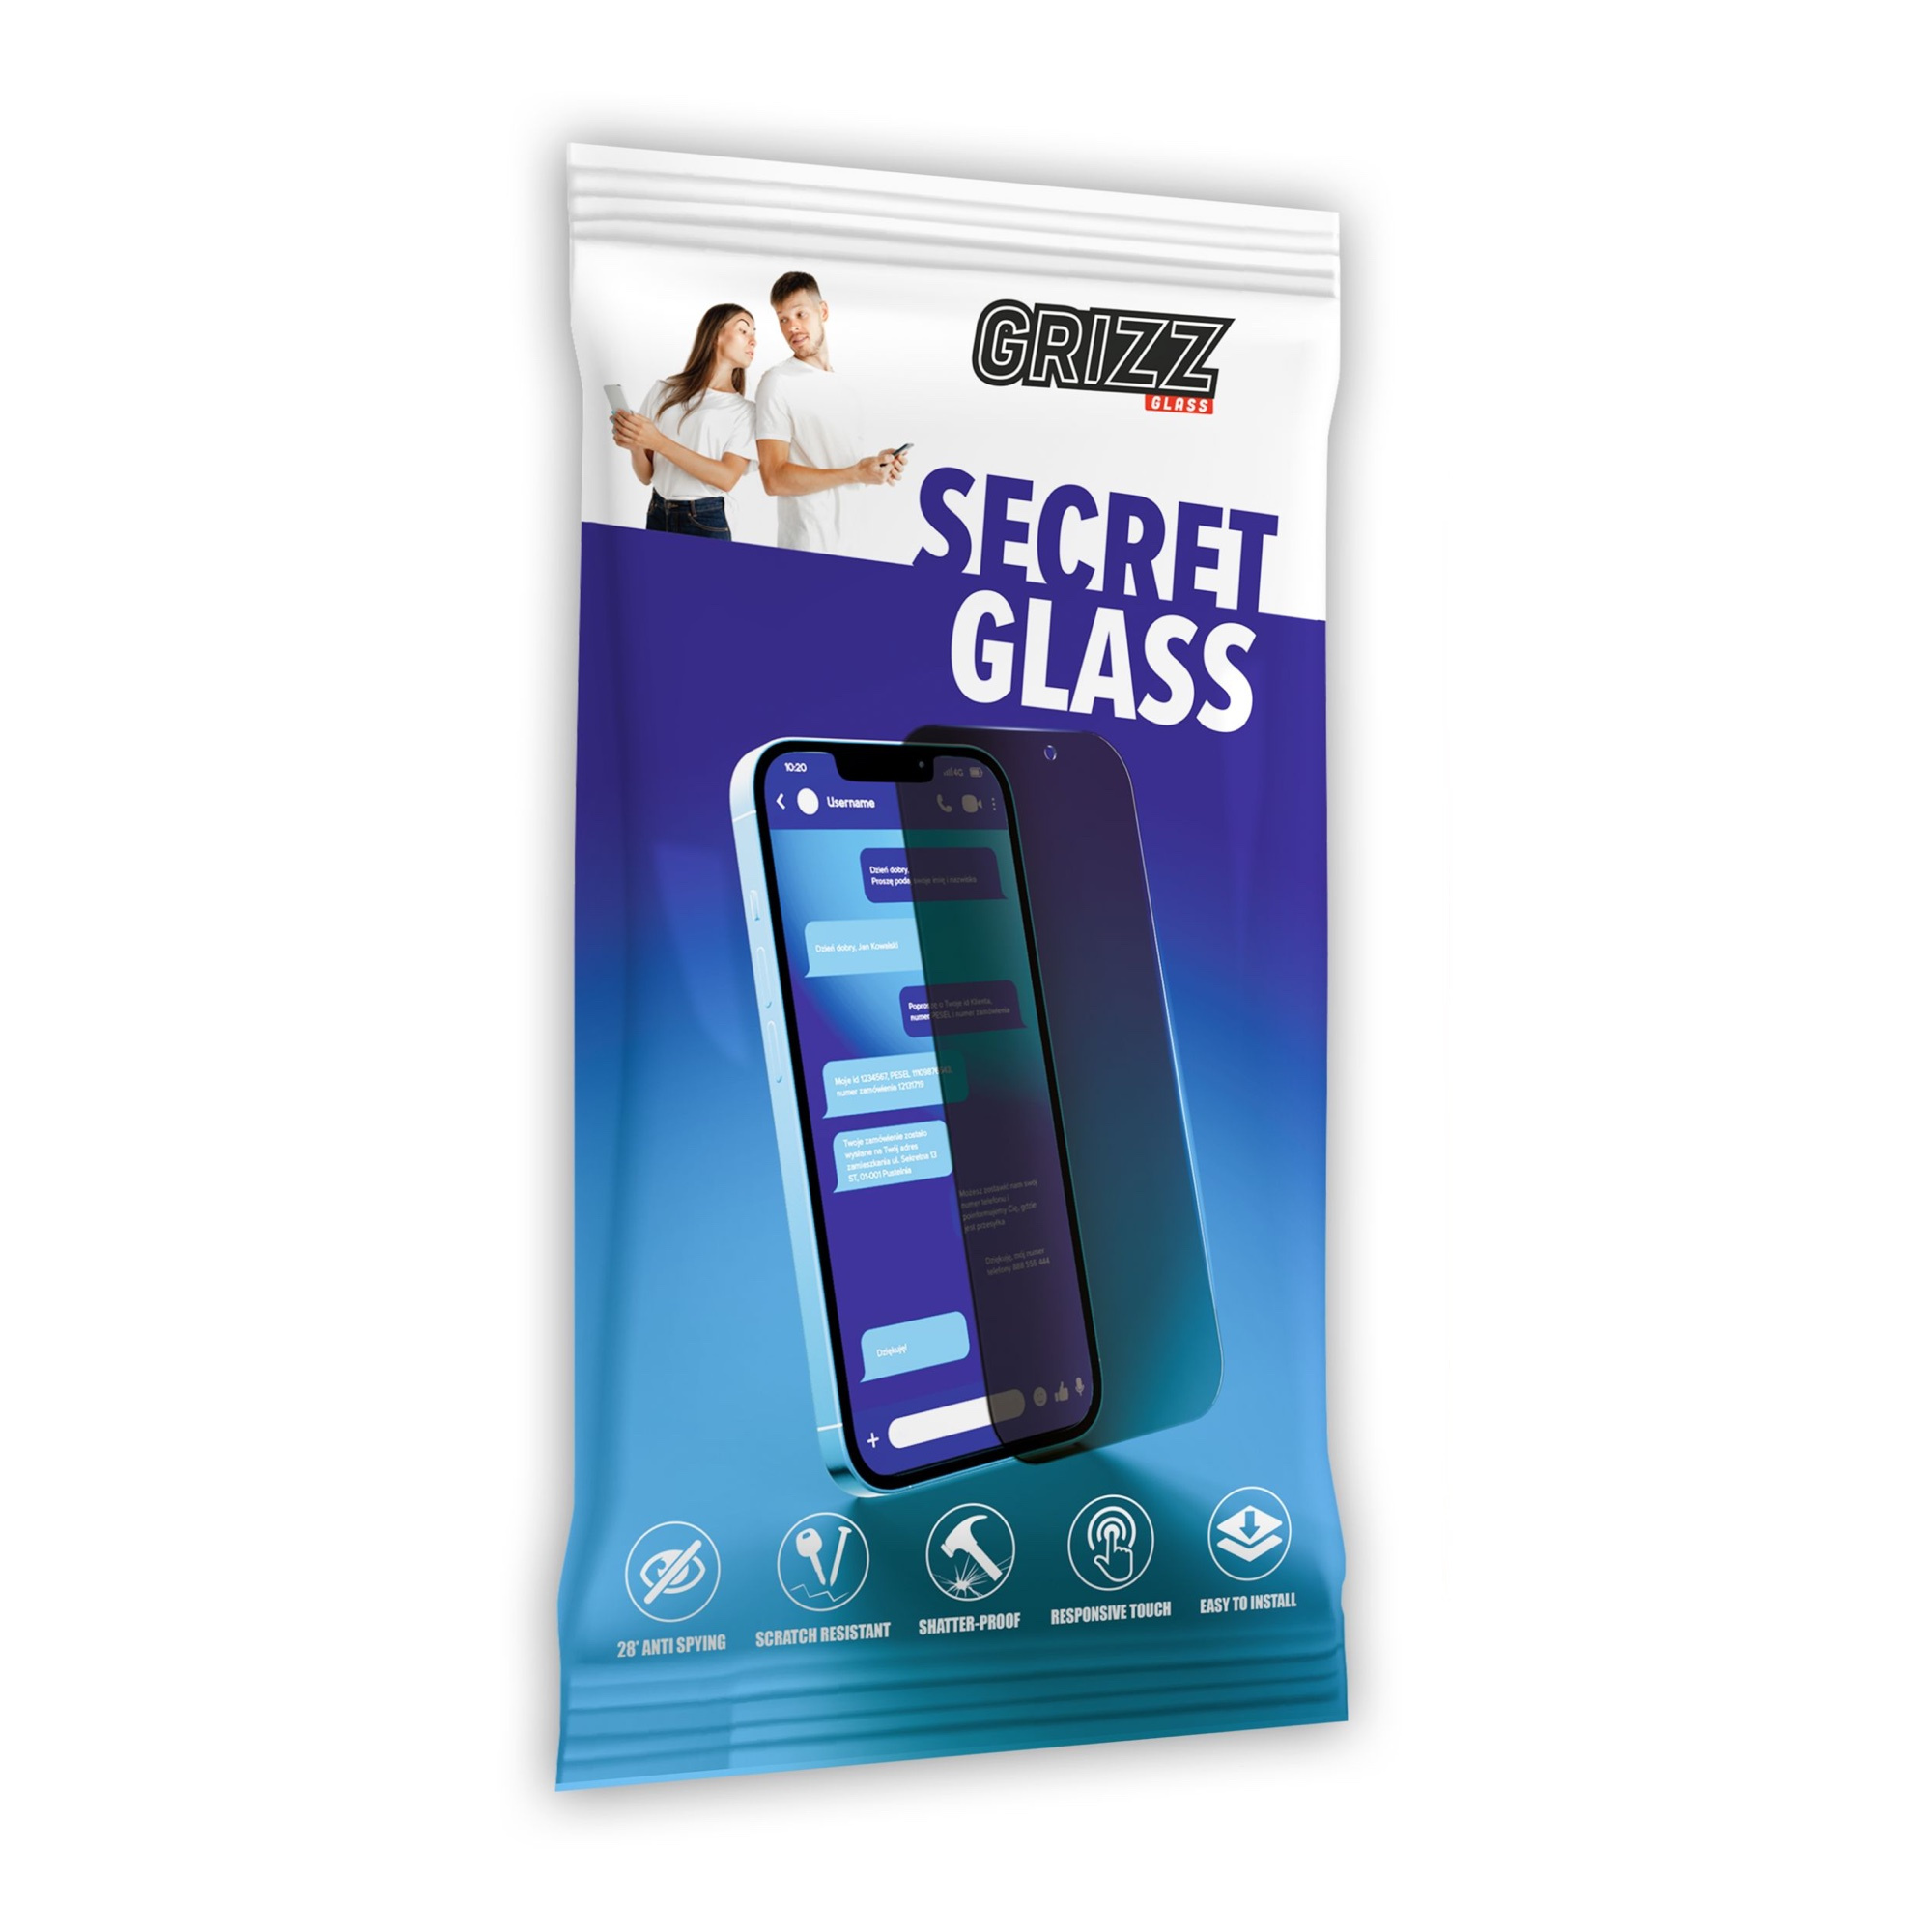 GrizzGlass SecretGlass vivo T2